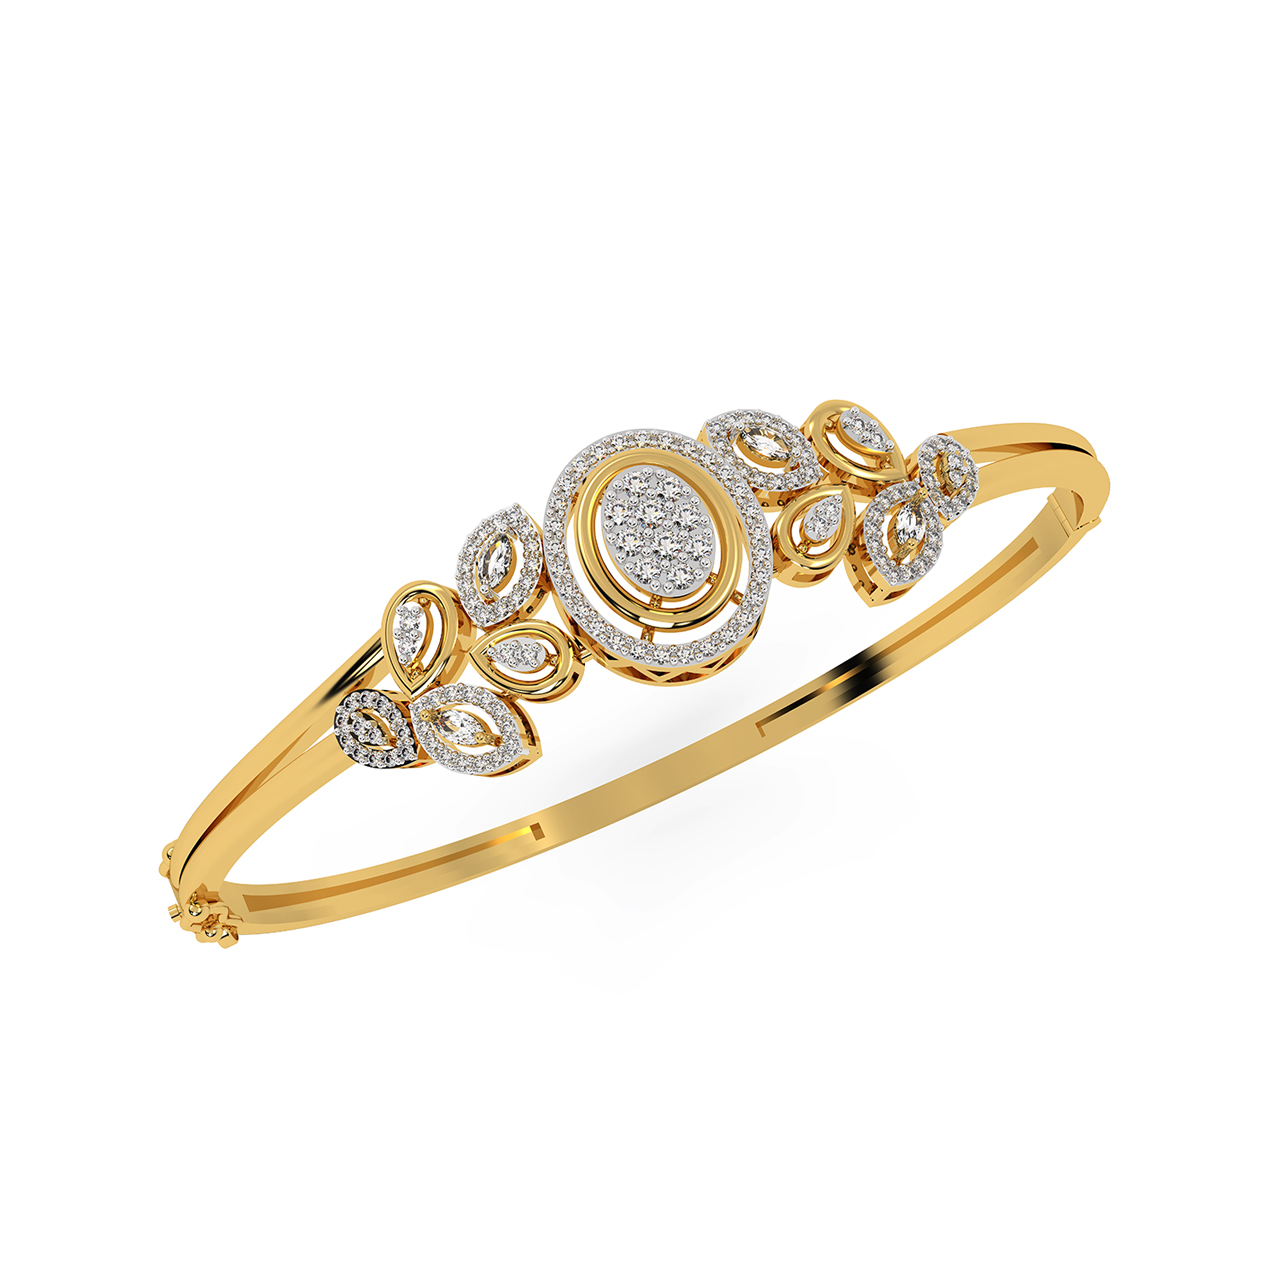 Bracelet - Malabar Gold Jewellery - Jewellery Designs